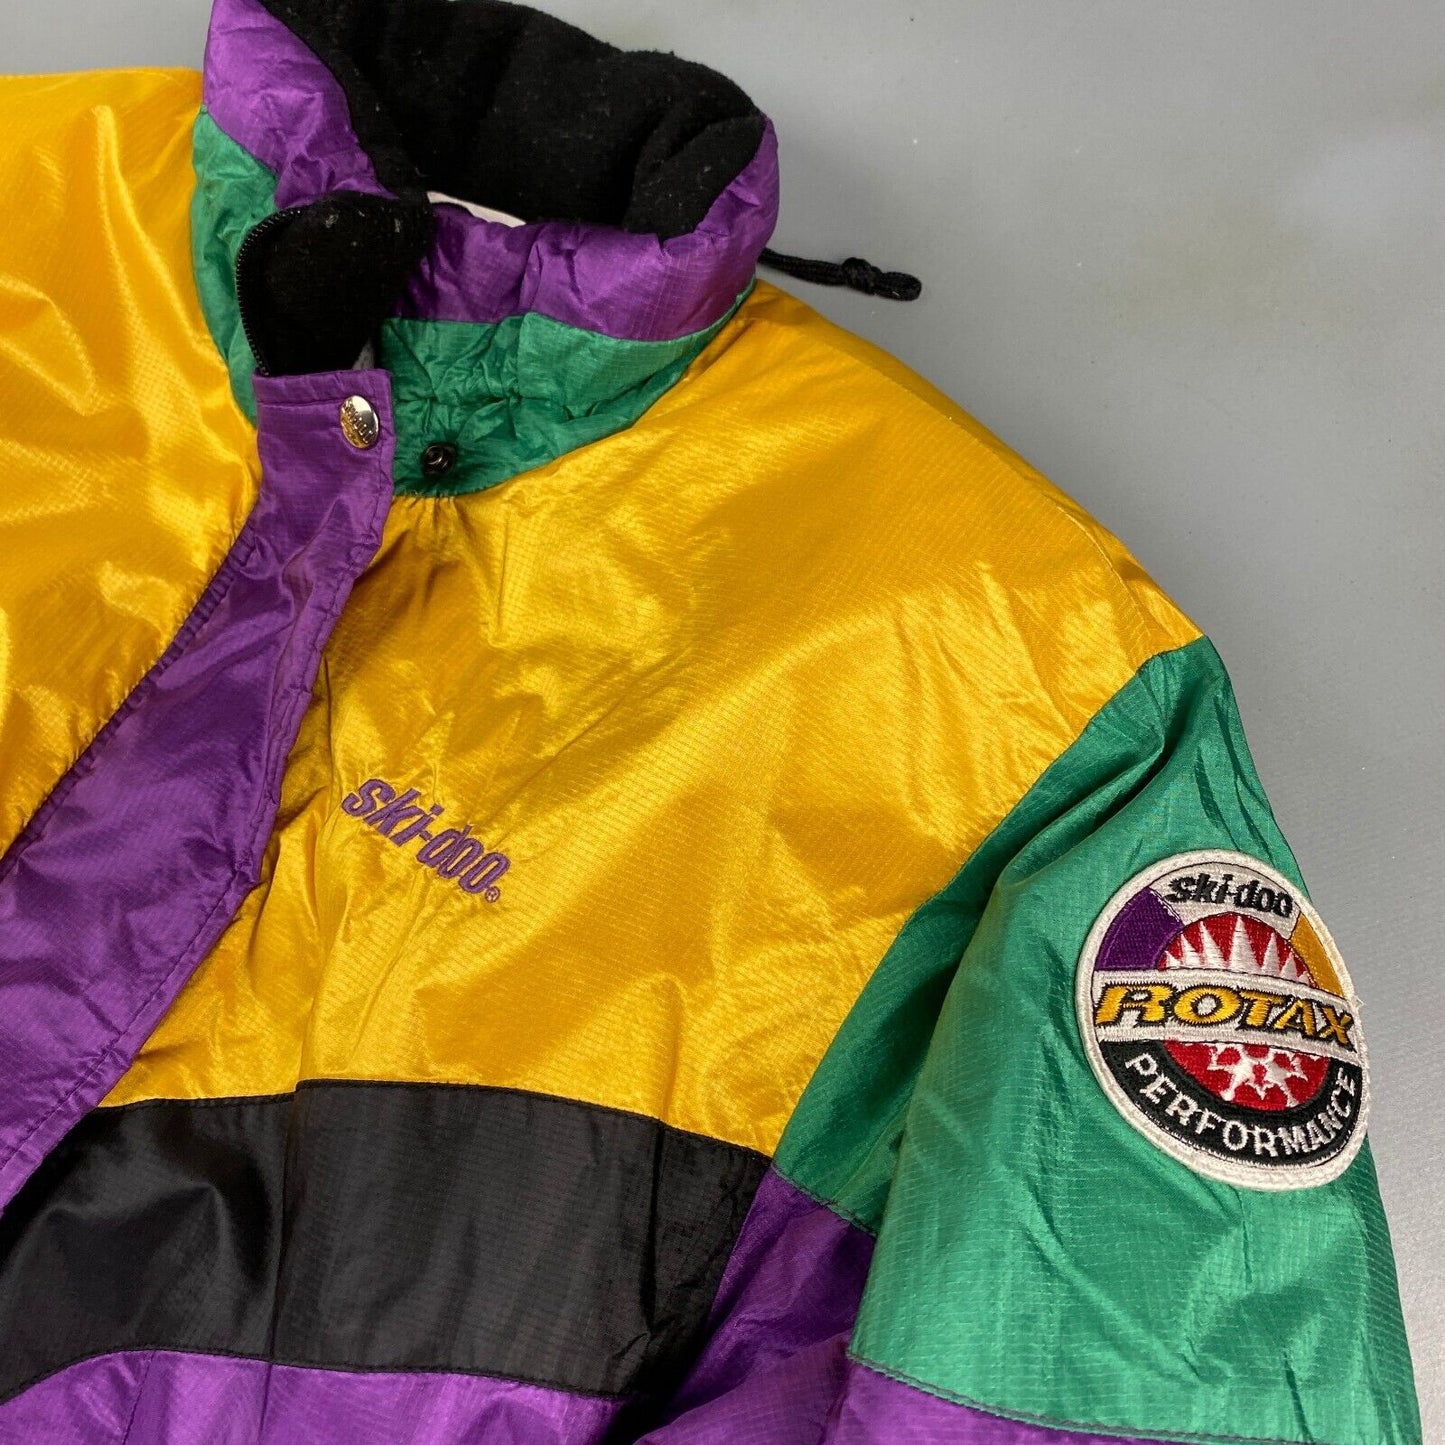 VINTAGE 90s Ski-Doo Rotax Performance Insulated Down Jacket sz Medium Adult